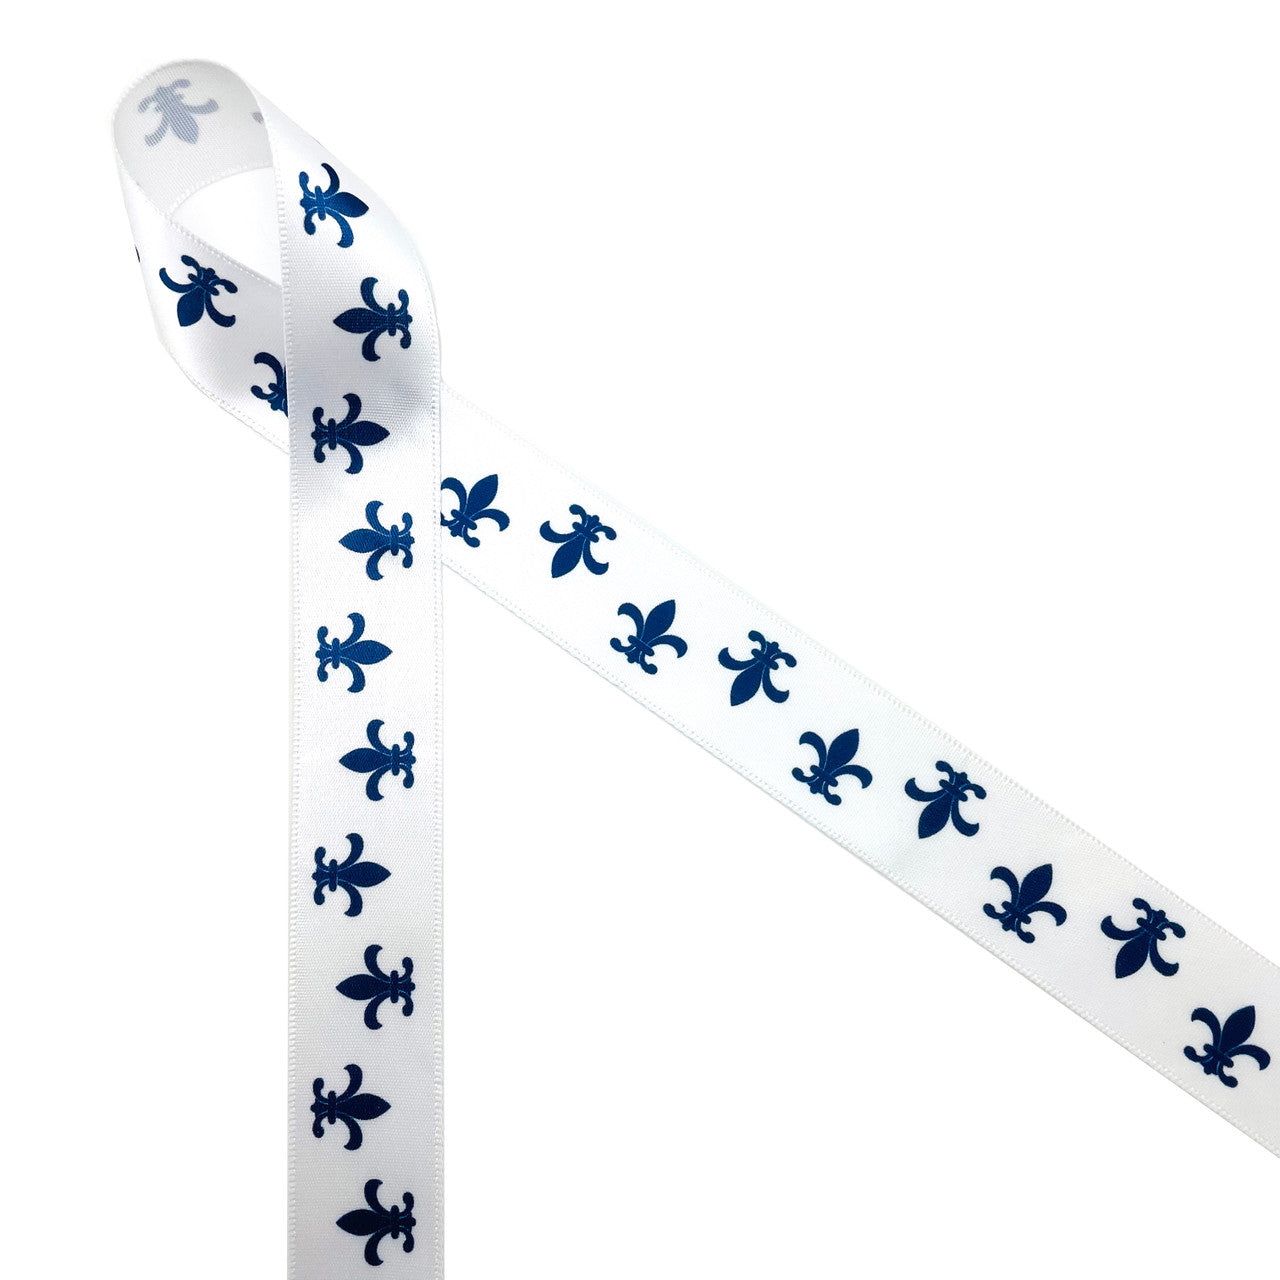 French Fleur de Lis in navy blue on 7/8 white satin ribbon